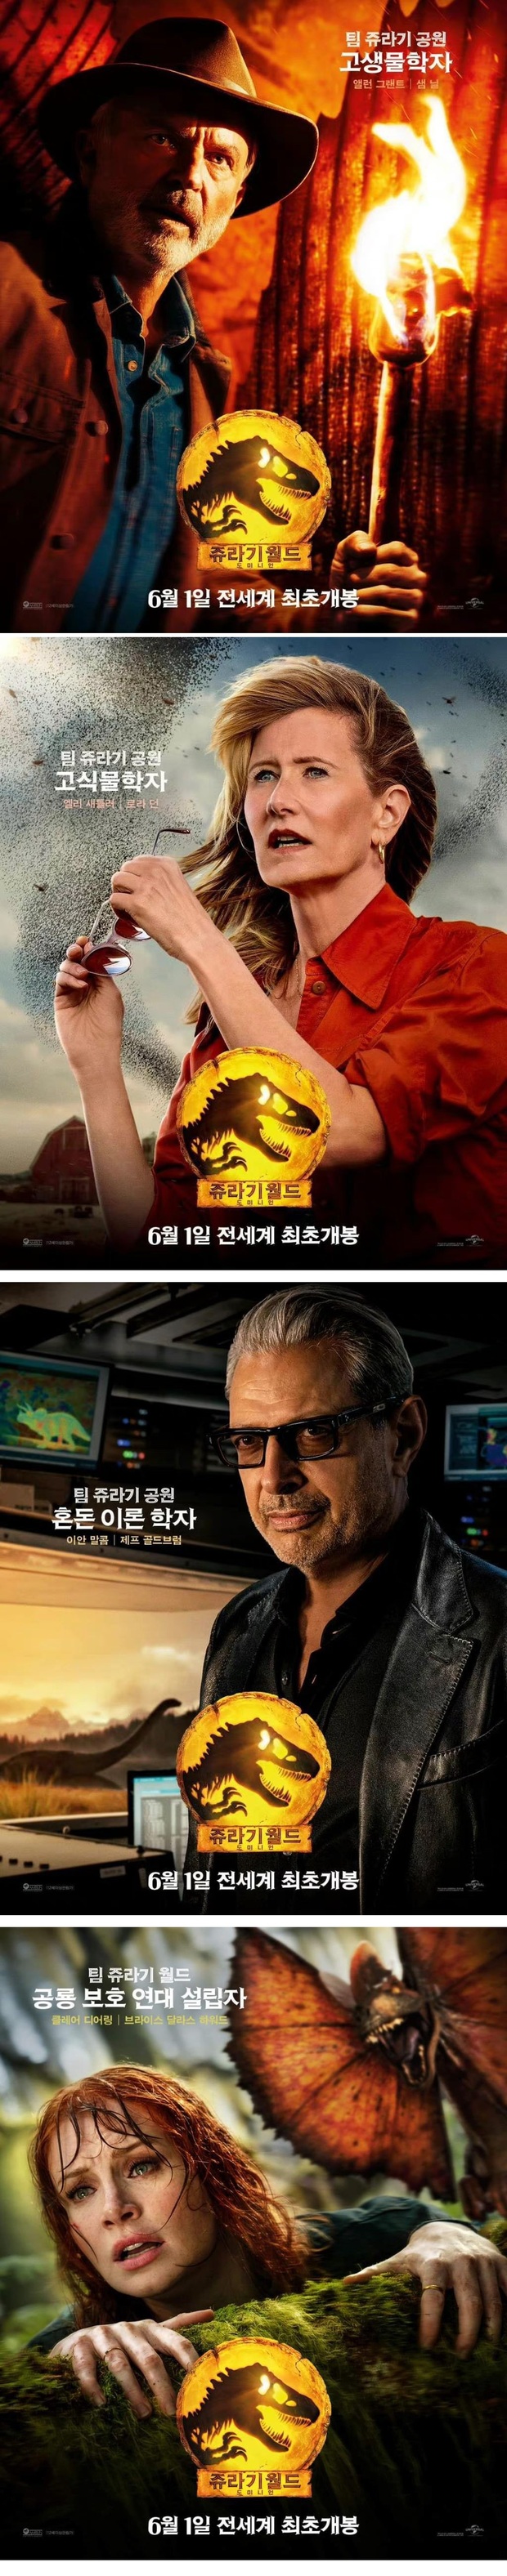 Nuevos posters Coreanos individuales de Jurassic World Dominion.